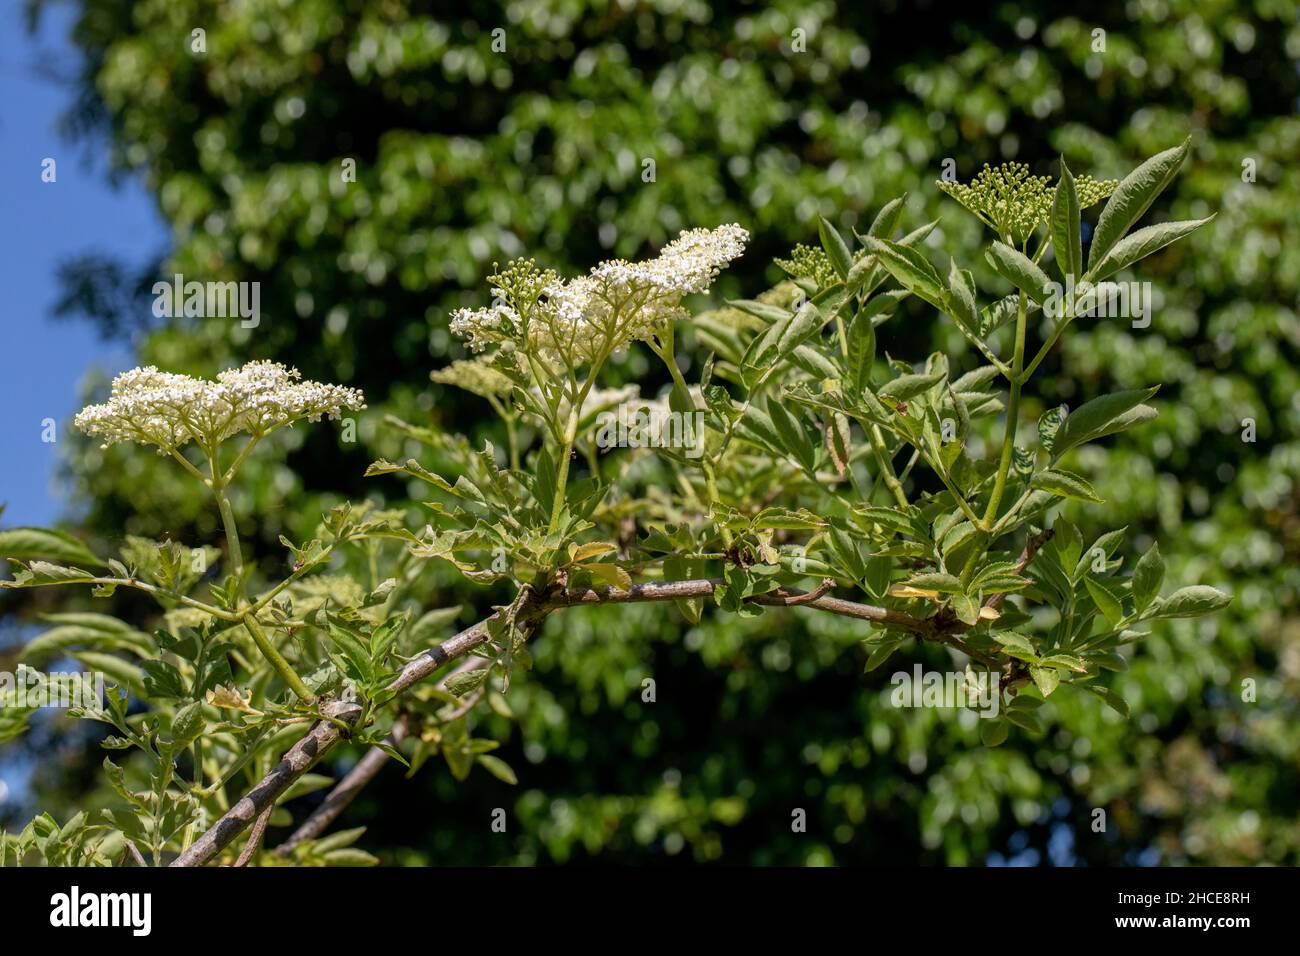 Elder (Sambucus nigra). in flower. Umbrella shaped flat topped white flowered petal heads. Insect pollenated. Woodland edge flora. Invertebrate sought Stock Photo